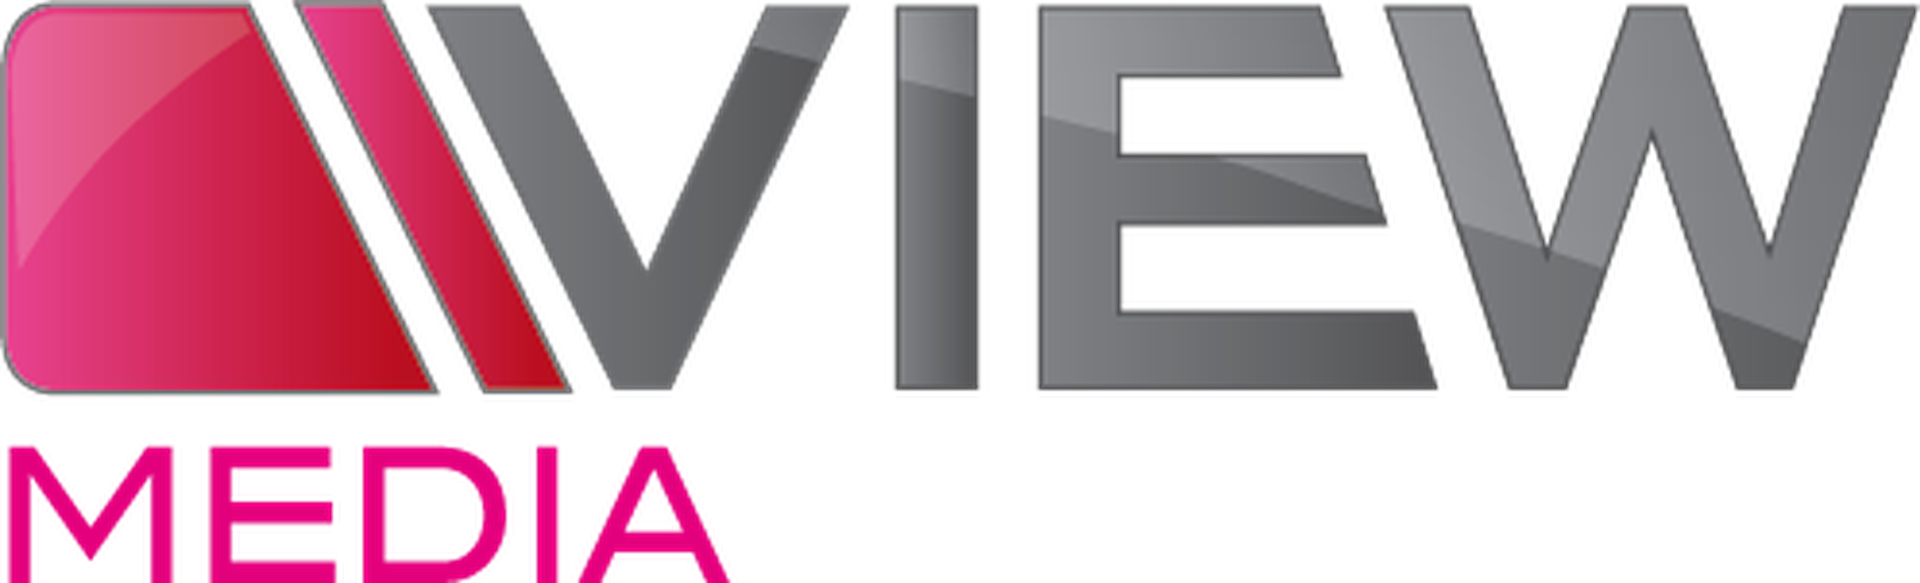 VIEW_MEDIA_Logo.png